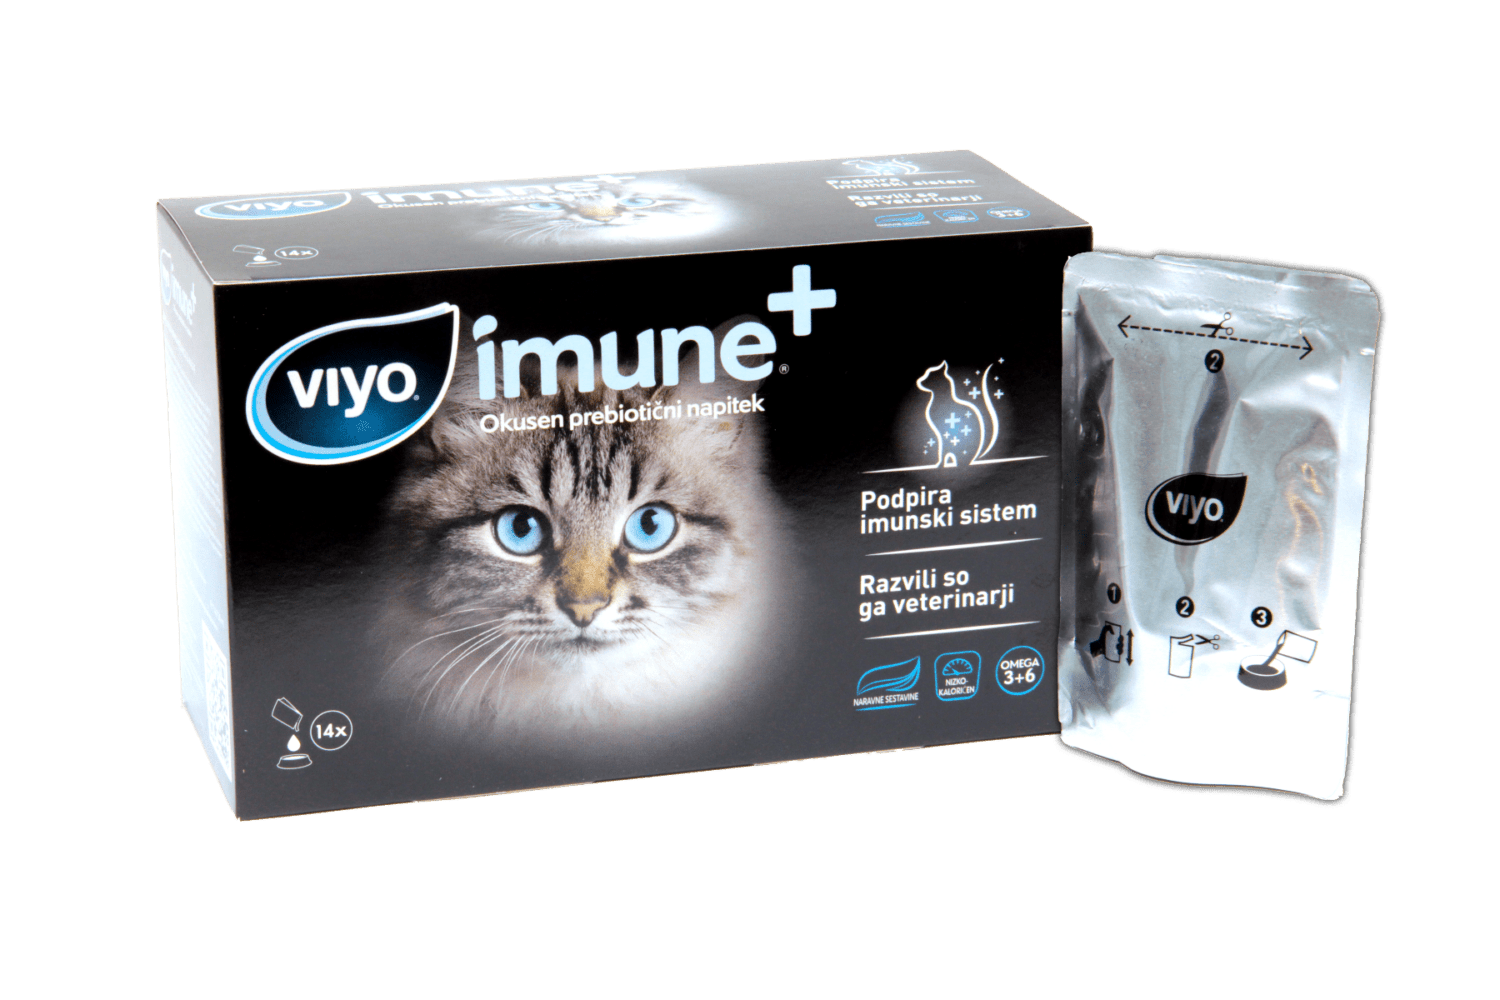 Viyo Imune+ prebiotični napitek za mačke, 14 x 30 ml